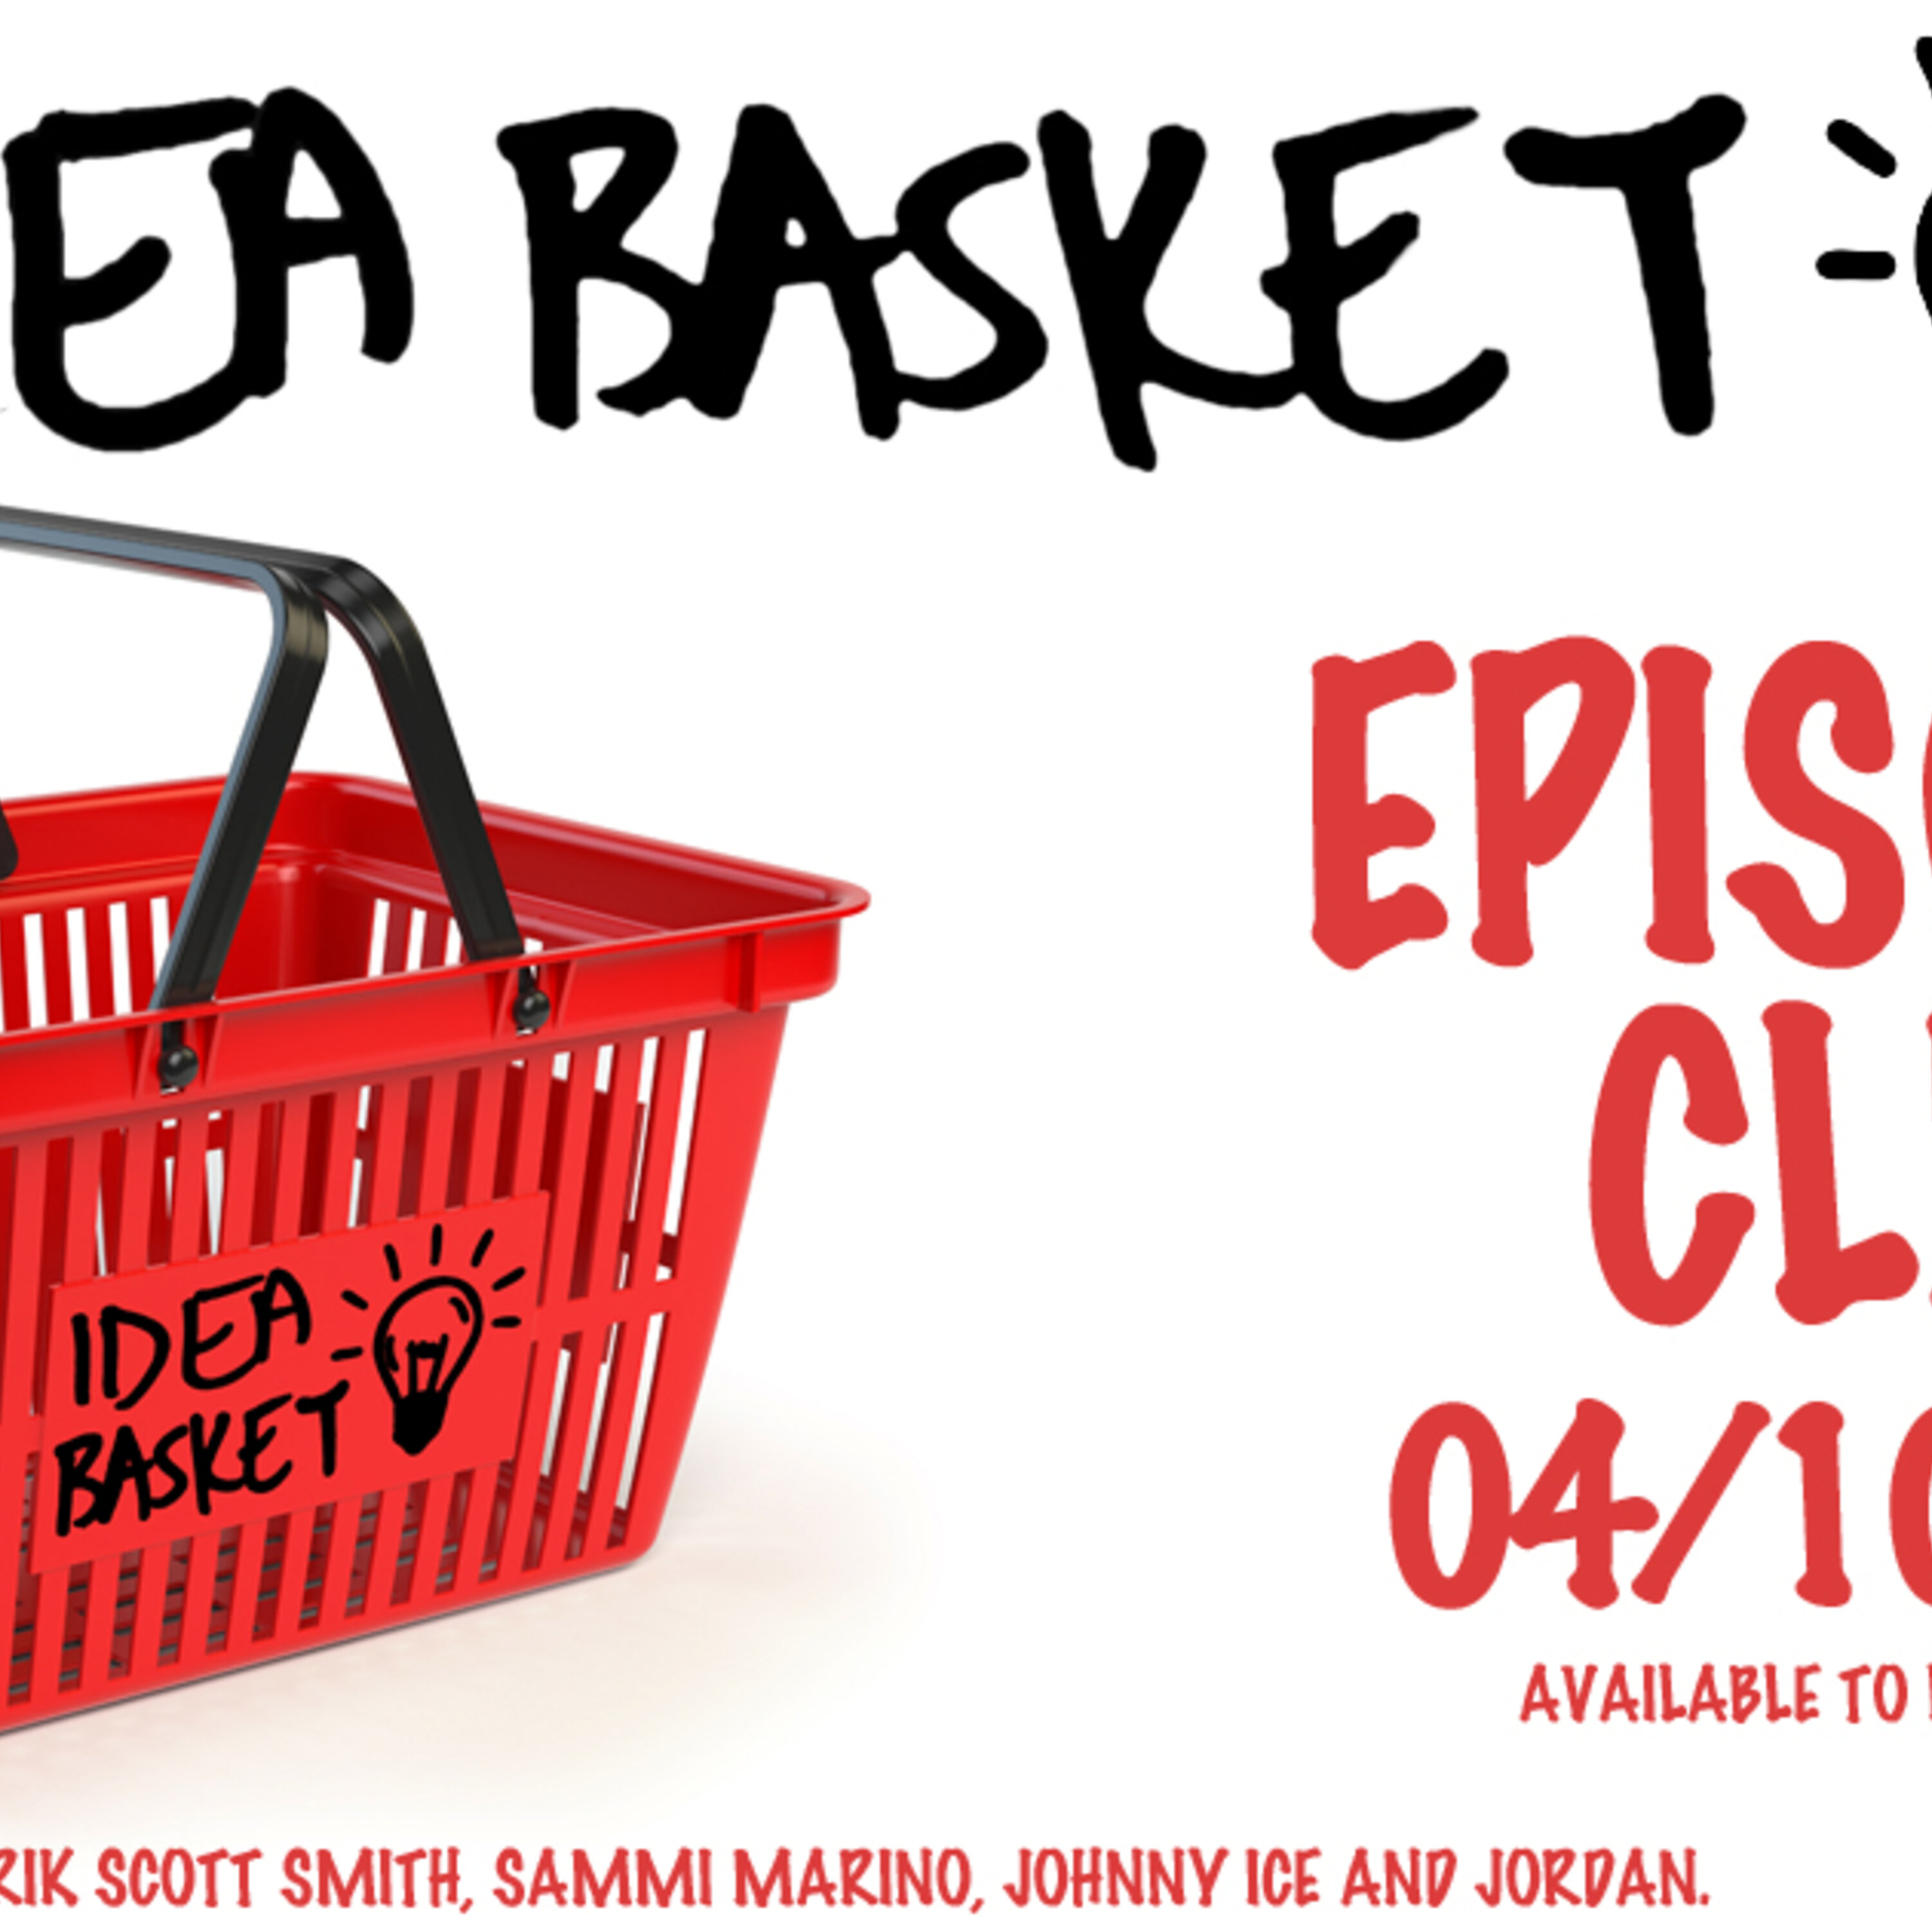 Idea Basket - Episode 15